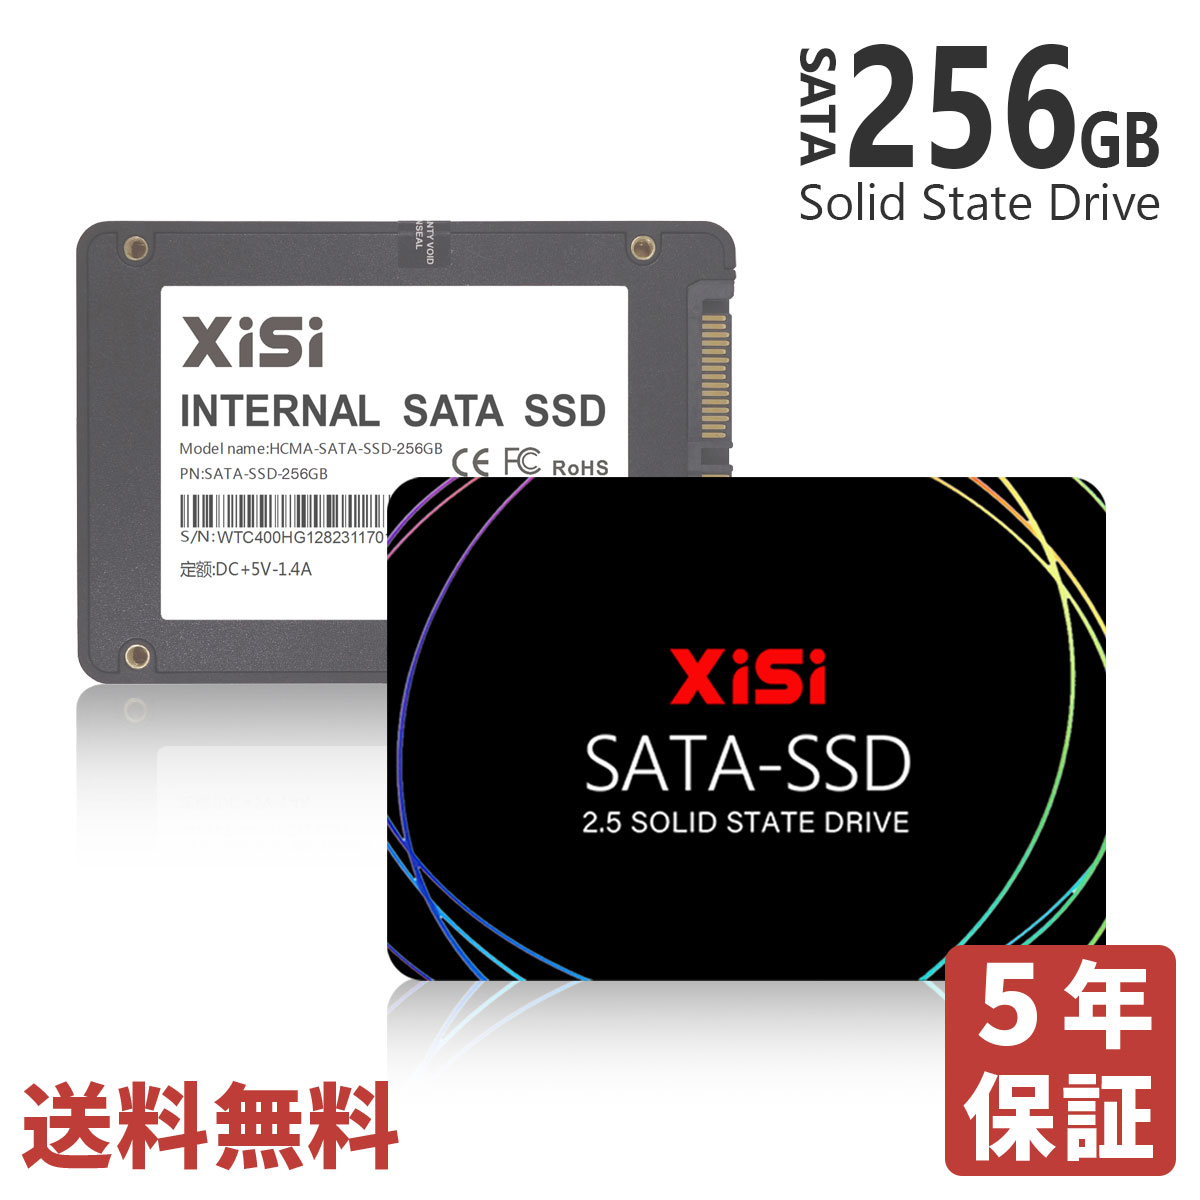 SSD 256GB XISI-SSD-256GB SATA【5年半保証・翌日配達送料無料】内蔵 2.5インチ 7mm SATAIII 6Gb/s 520MB/s 3D NAND採用 デスクトップパソコン ノートパソコン PS4検証済み エラー訂正機能